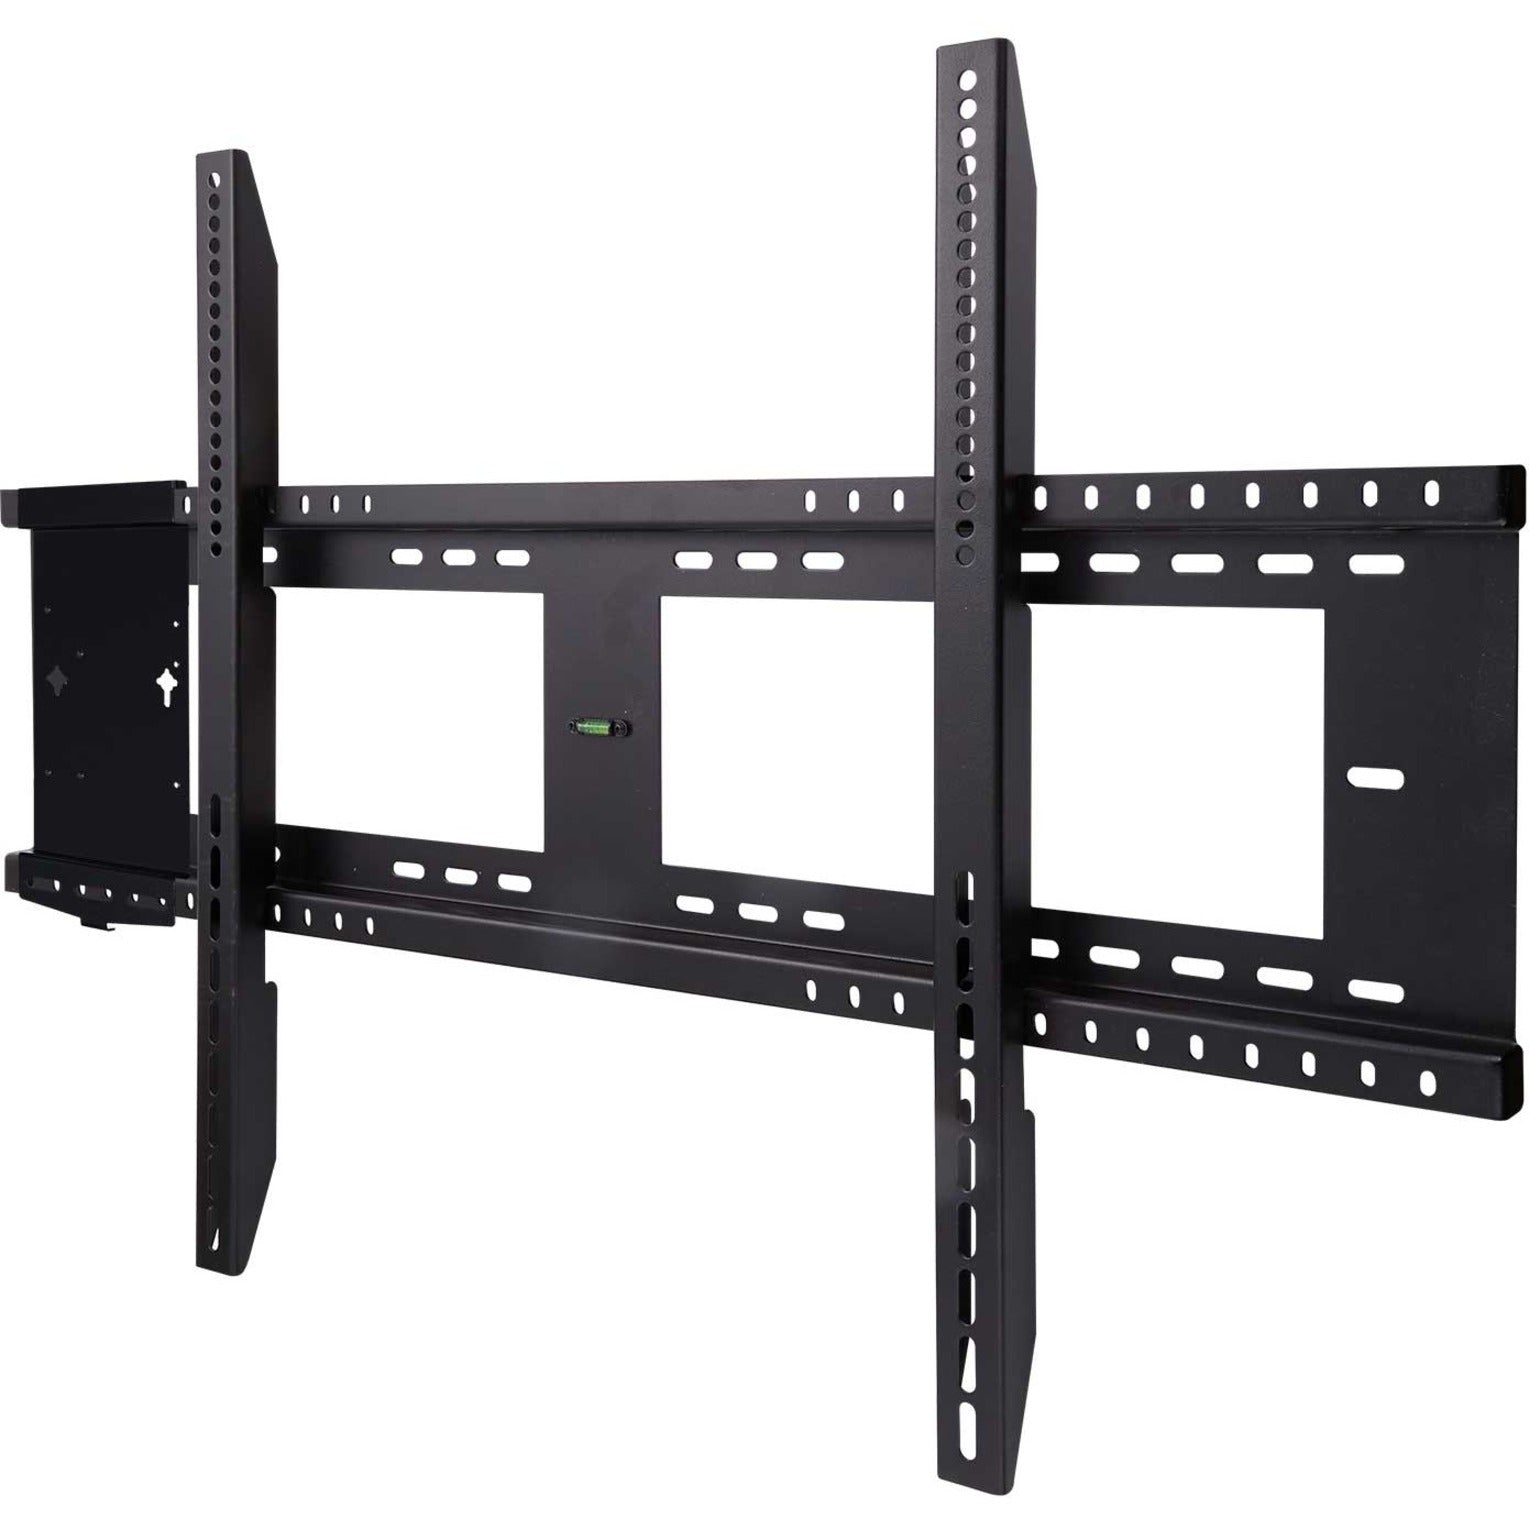 ViewSonic IFP5550-E1 ViewBoard 4K Ultra HD Interactive Flat Panel Bundle, 55" Screen, 20 Touch Points